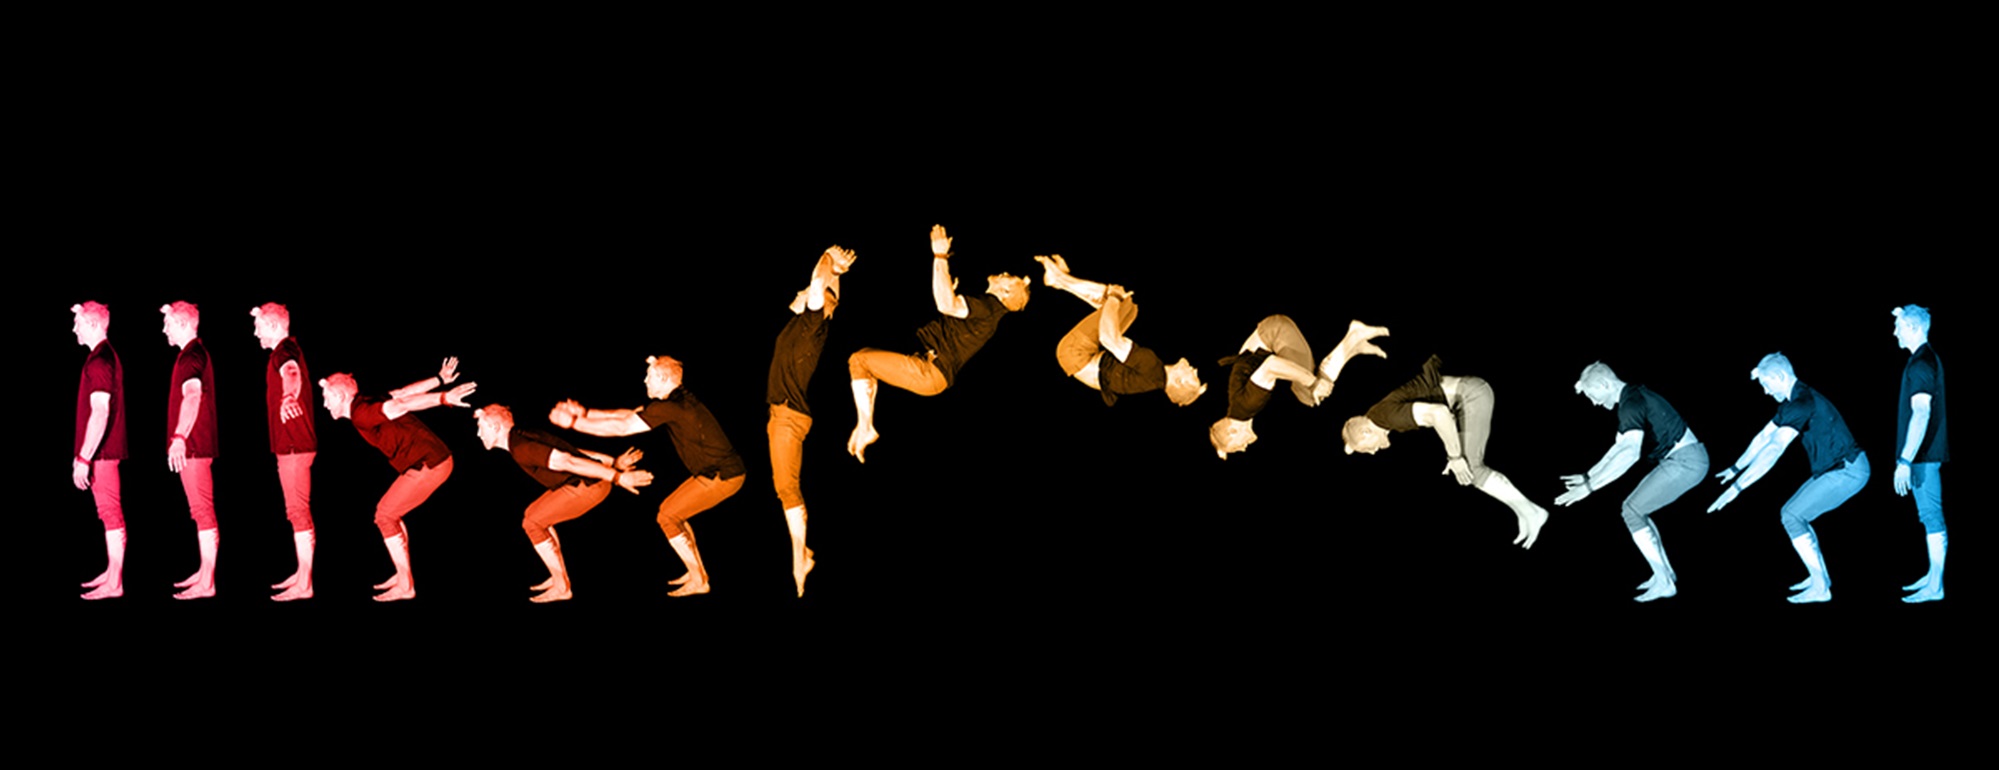 A frame by frame illustration of a man doing a backflip